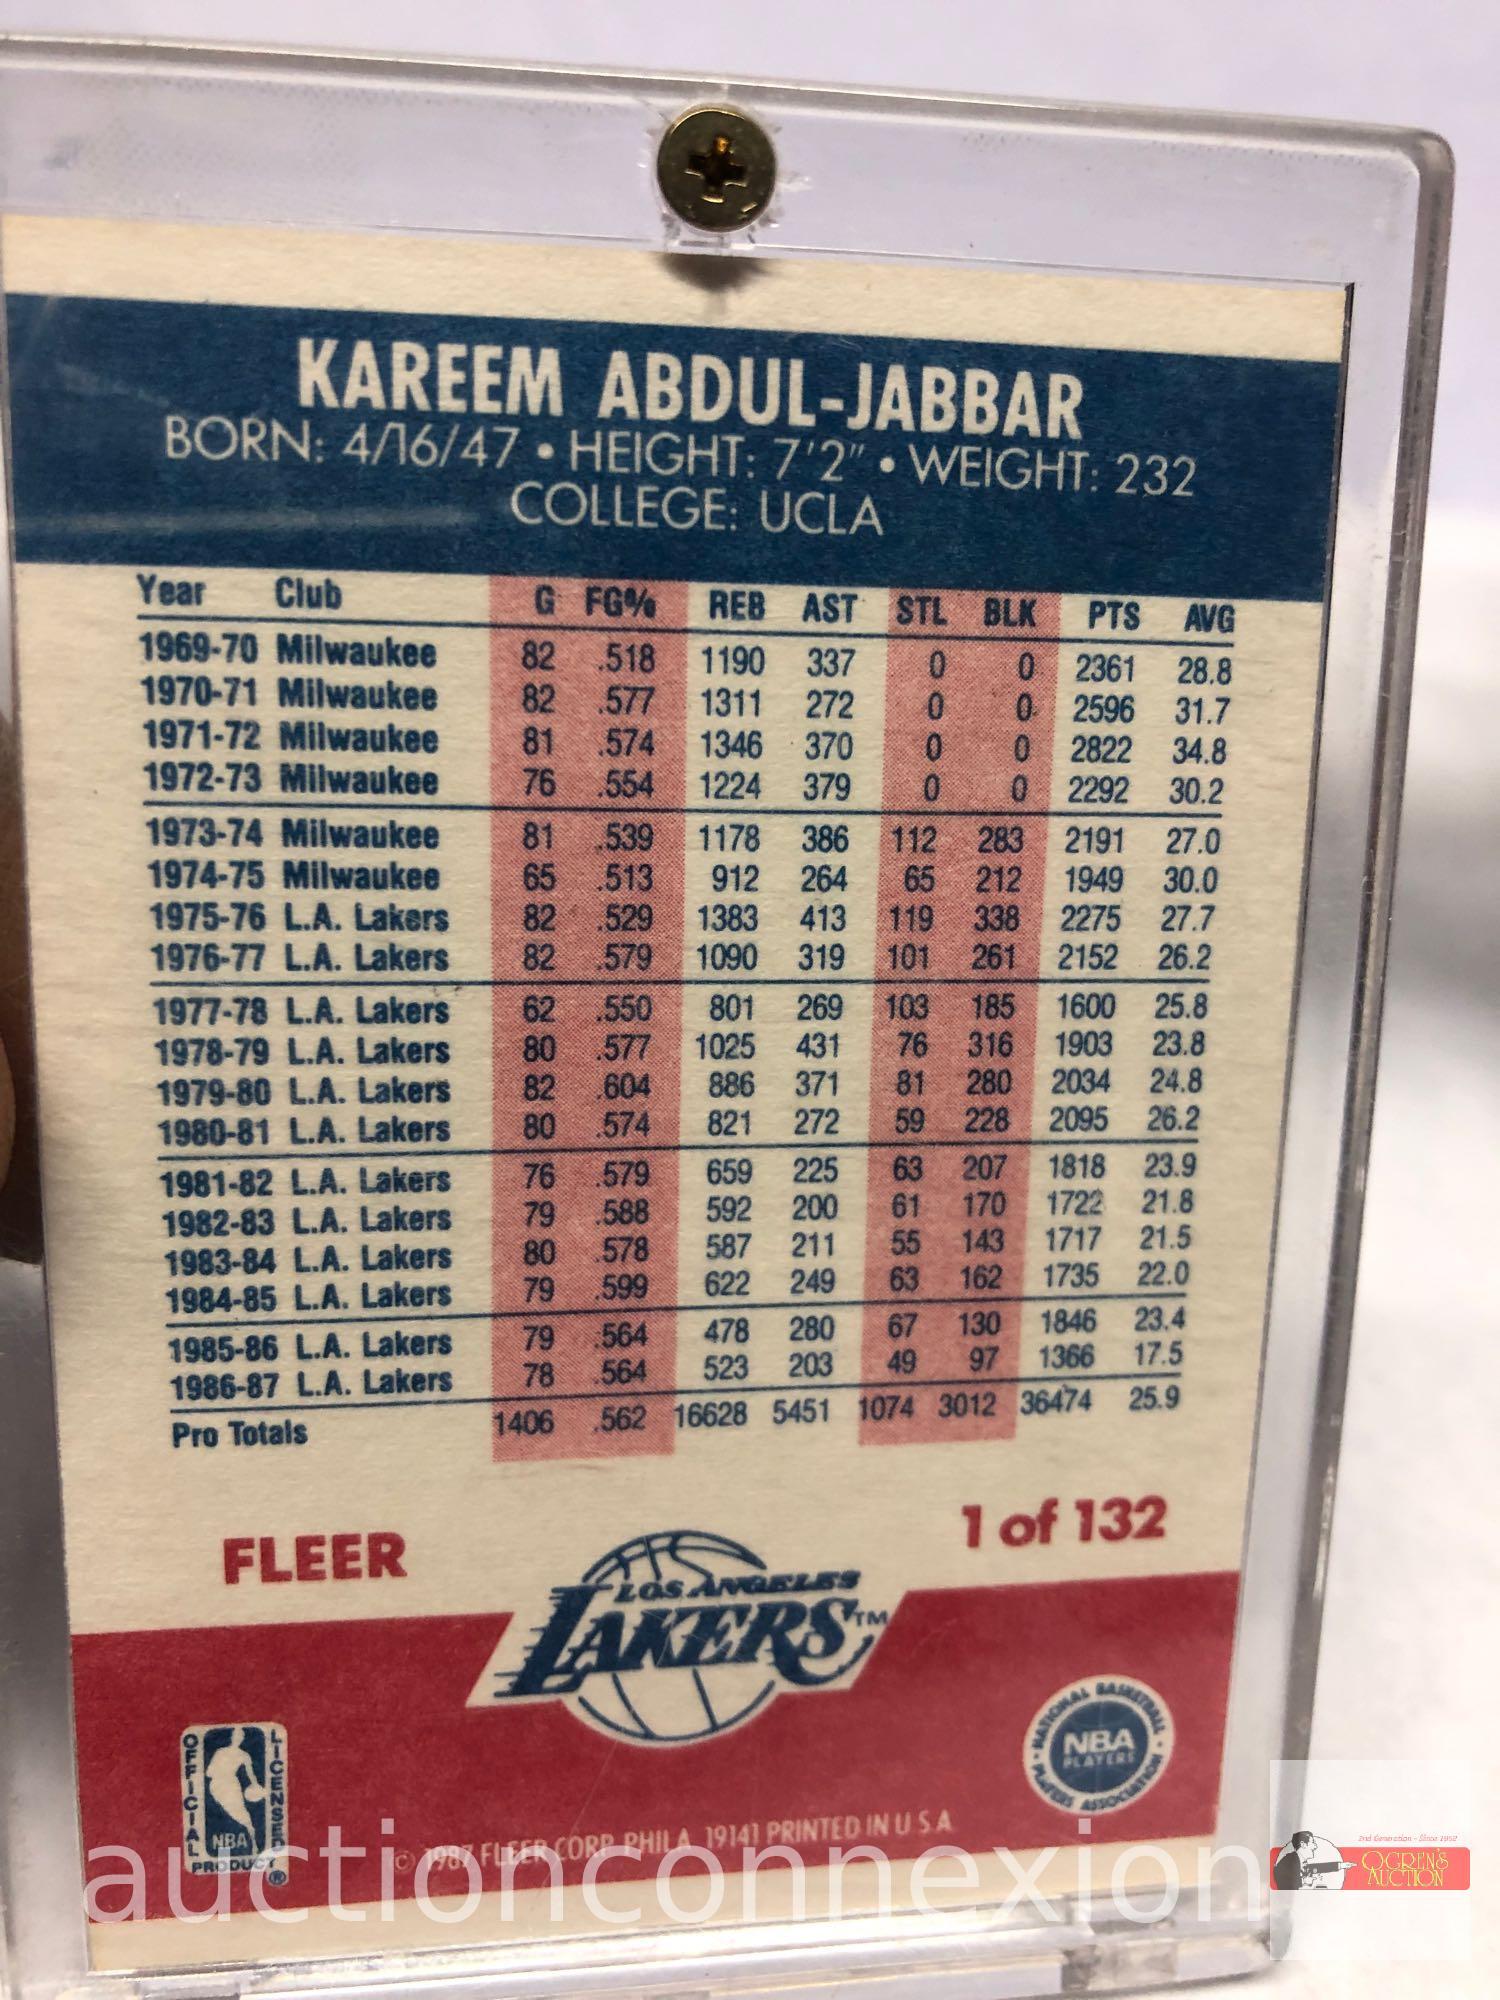 Ephemera - 3 Sports cards, Michael Jordan, Bulls - Kobe Bryant, Lakers - Kareem Abdul-Jabbar, Lakers